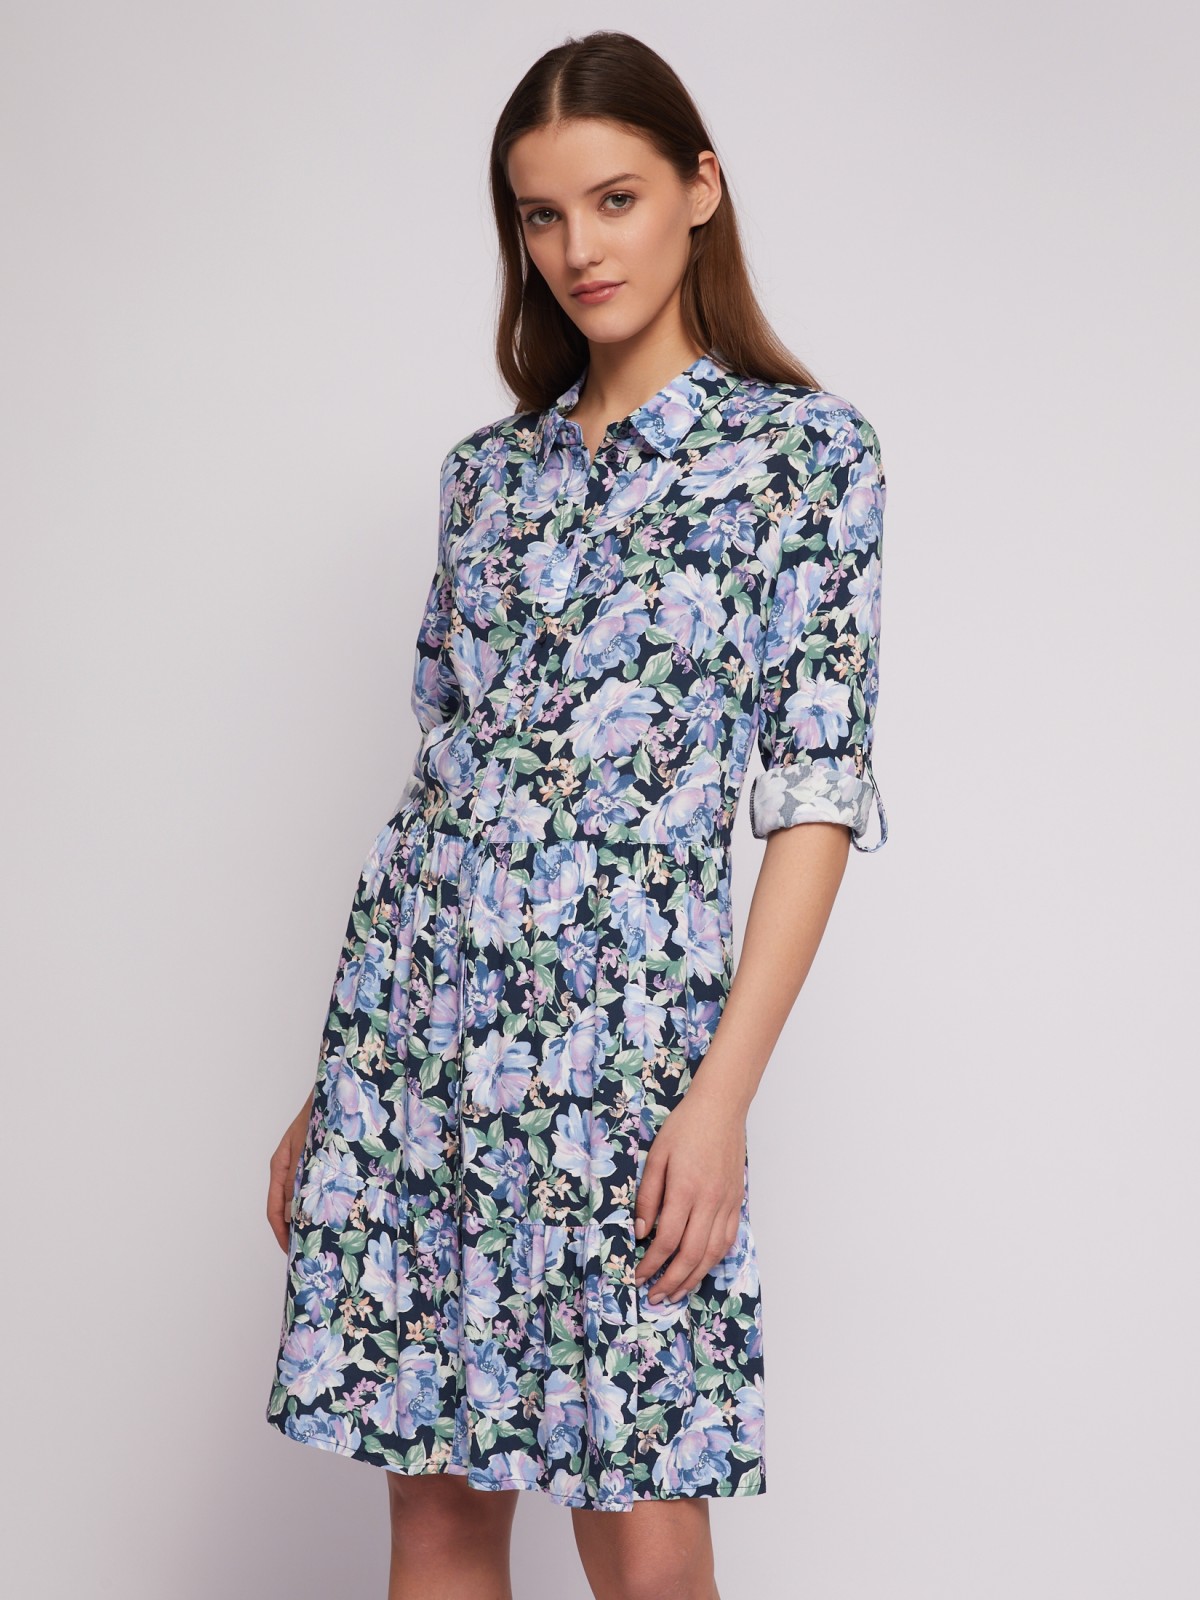 Ярусное платье-рубашка с подхватами на рукавах zolla N24218259021, цвет синий, размер S - фото 1